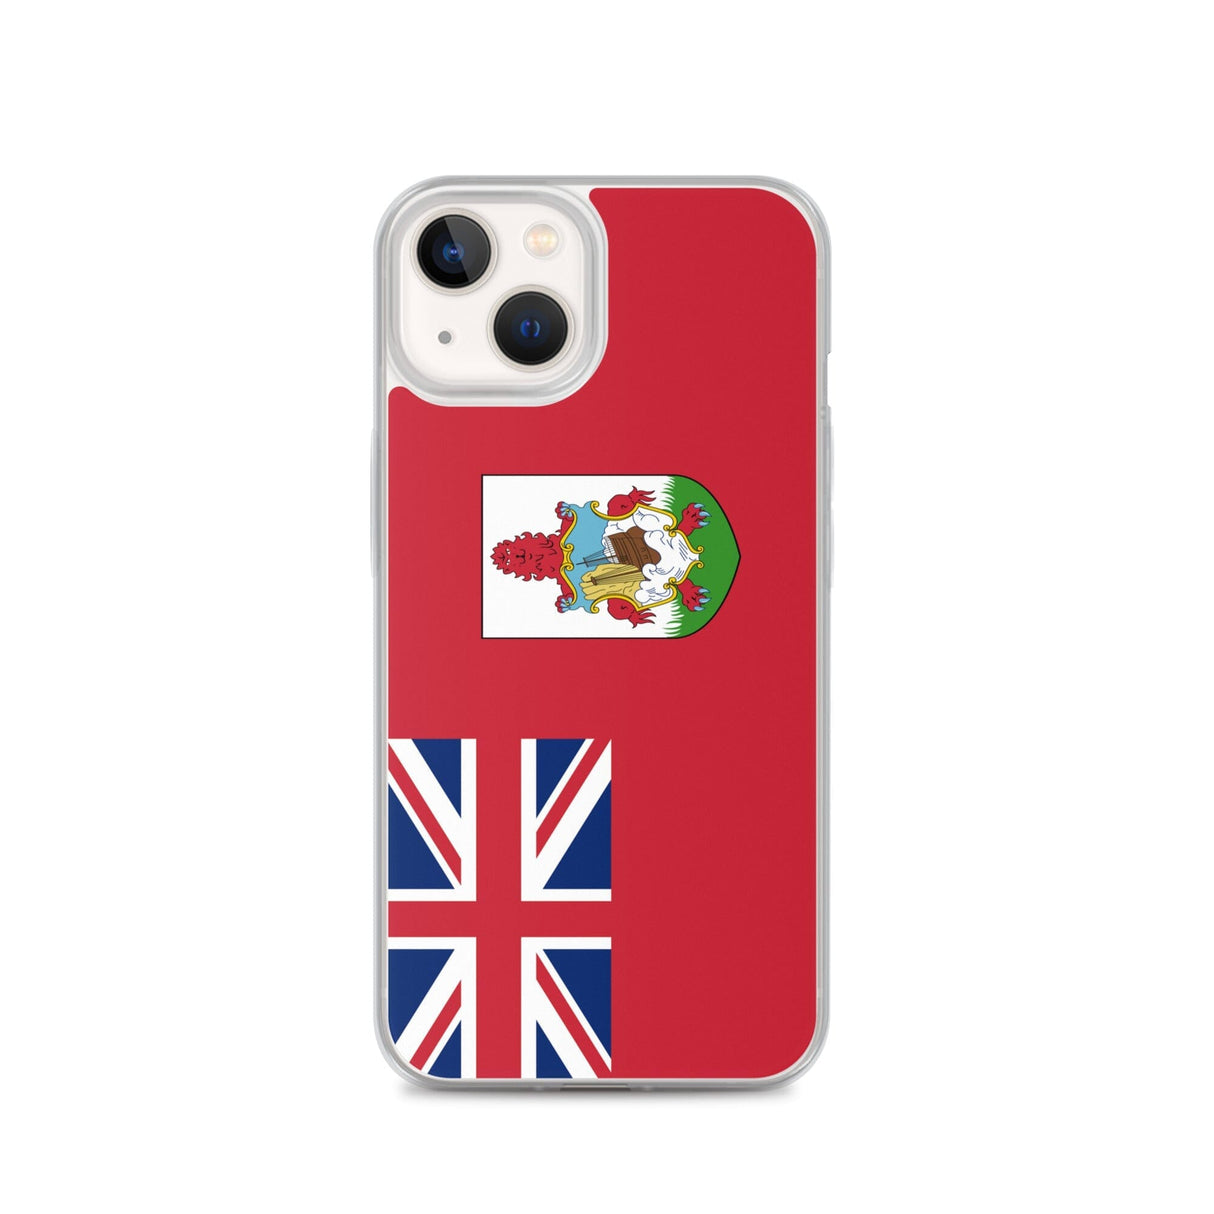 Bermuda Flag iPhone Case - Pixelforma